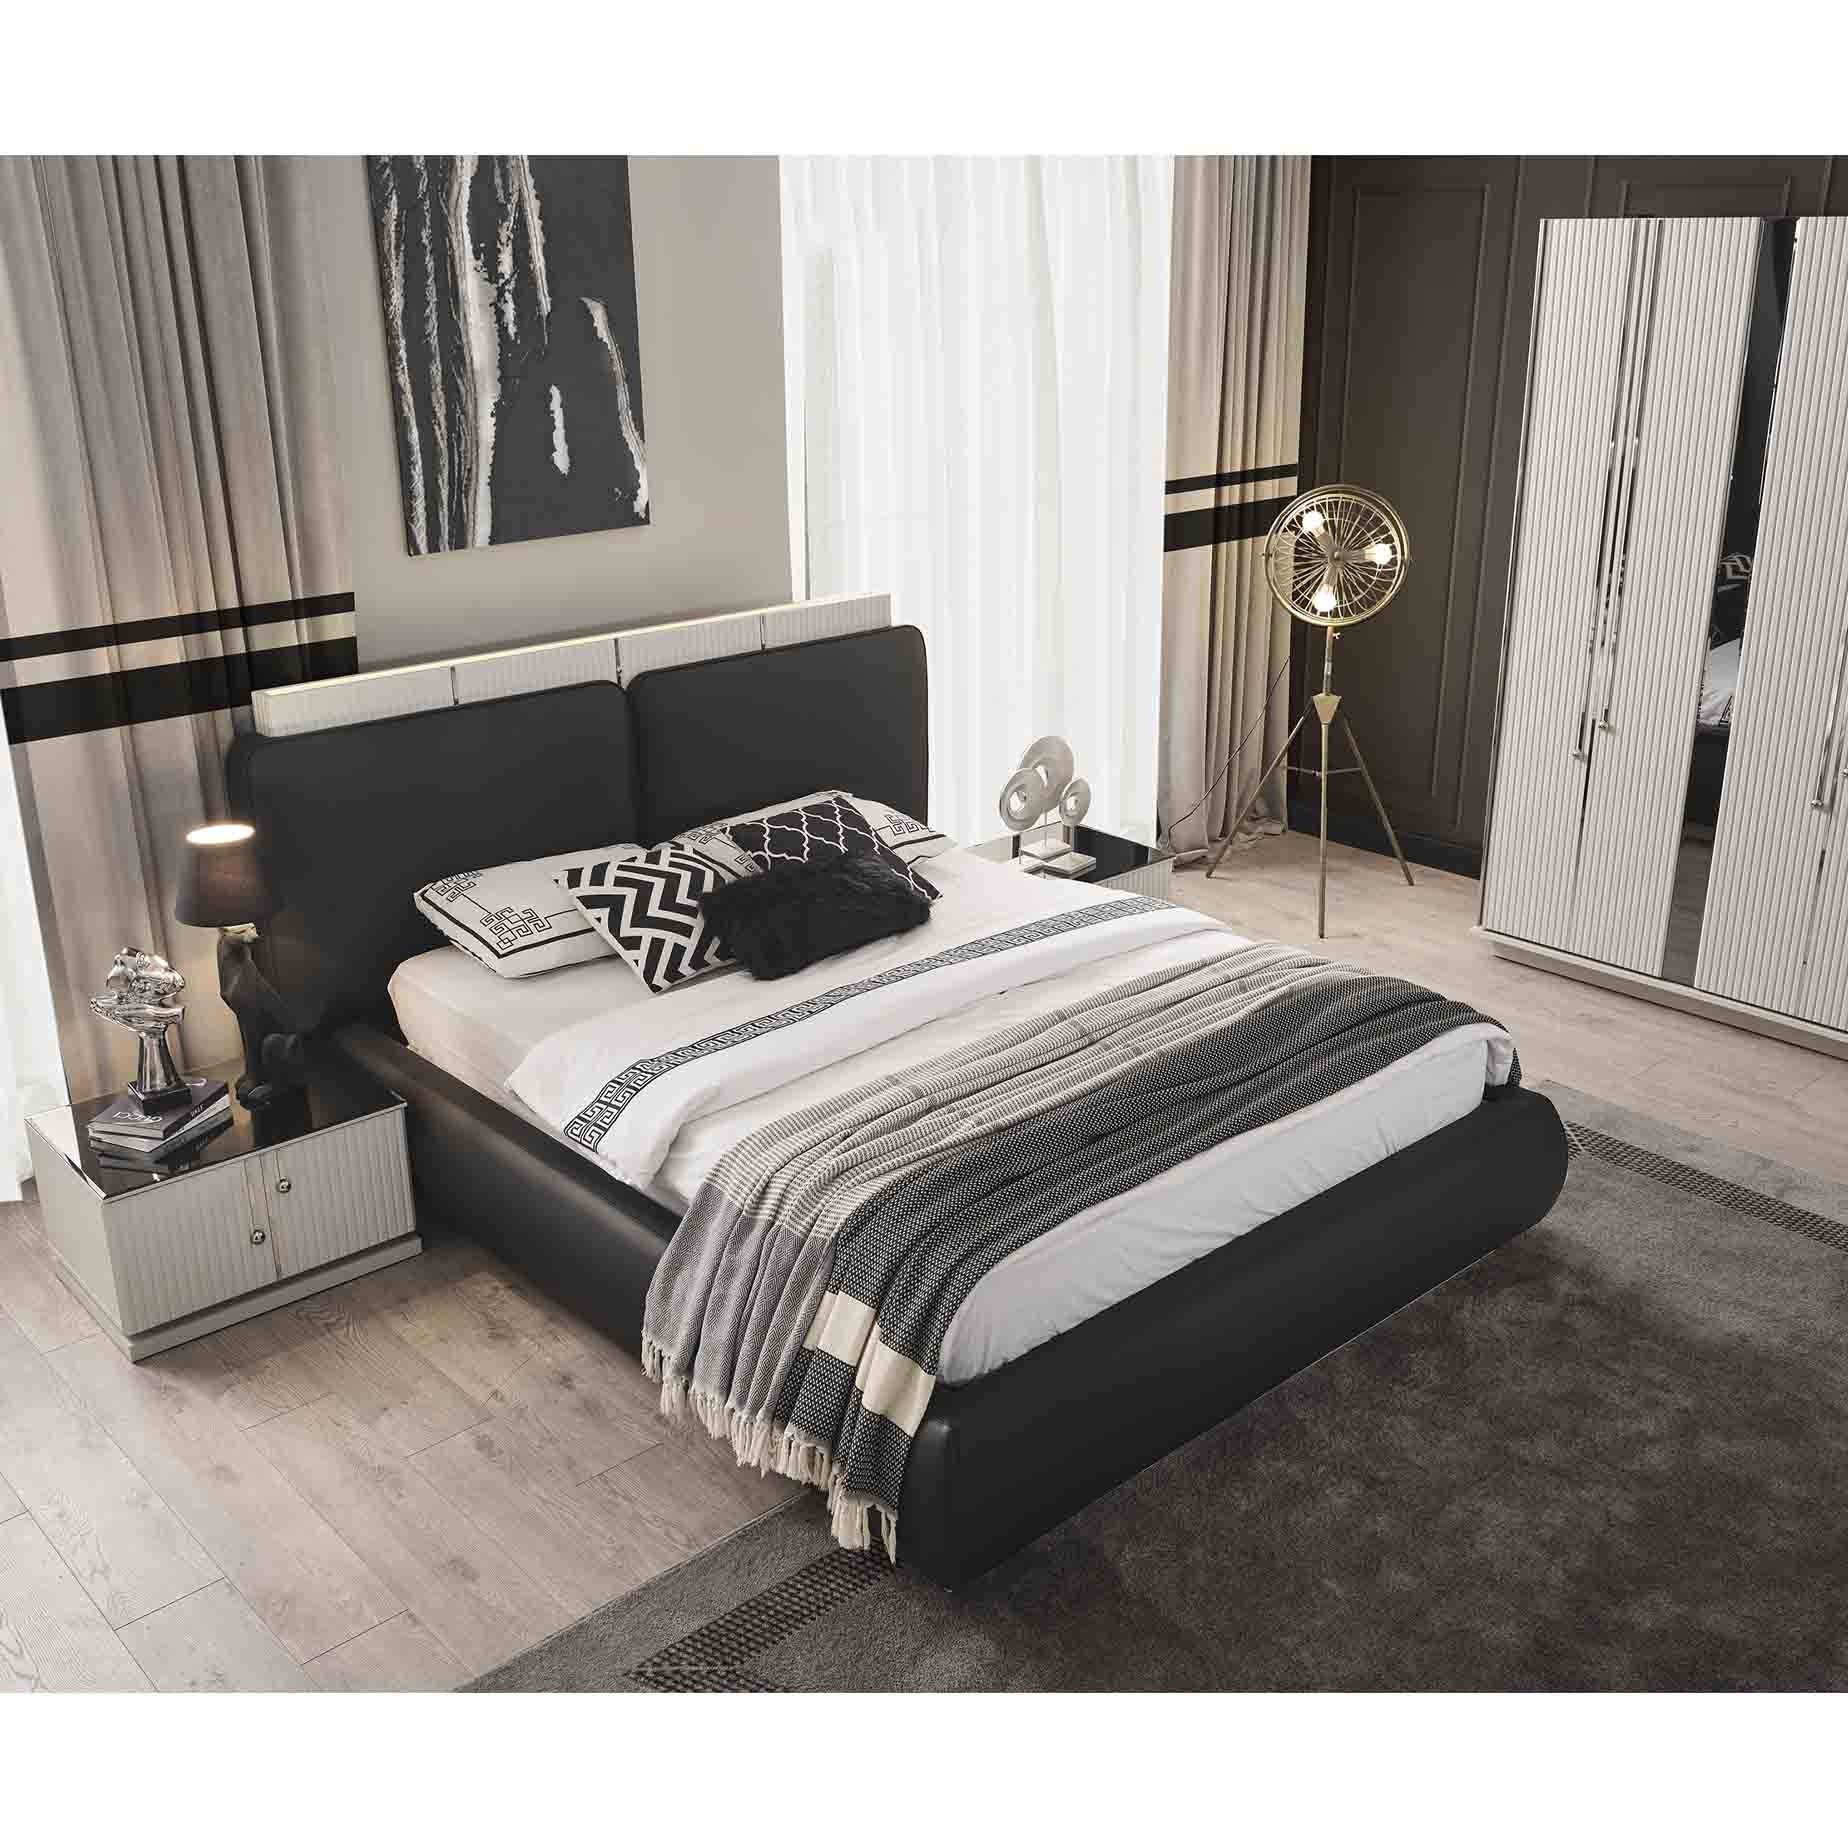 Vizyon 160x200cm Bed With Storage